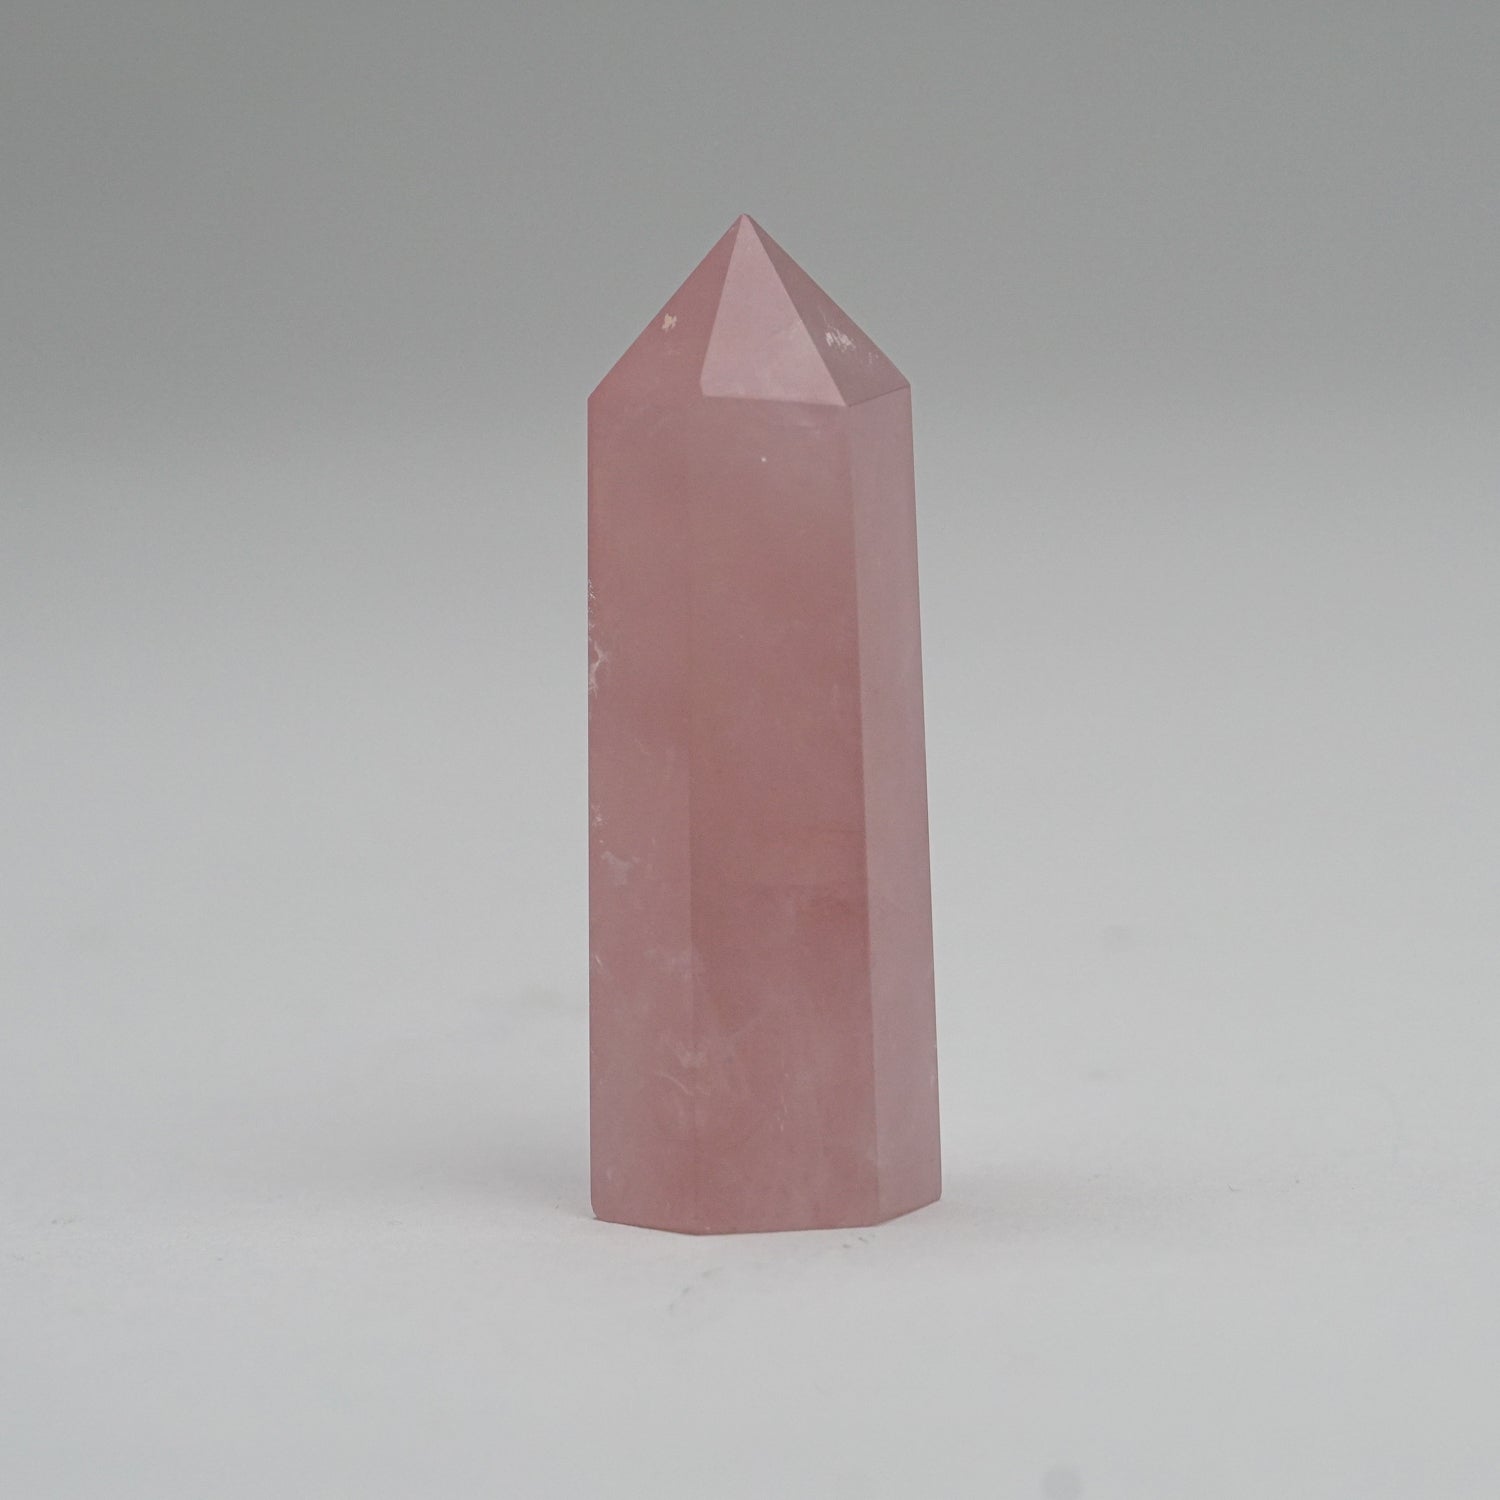 Rose Quartz Polished Point from Brazil (38 grams)